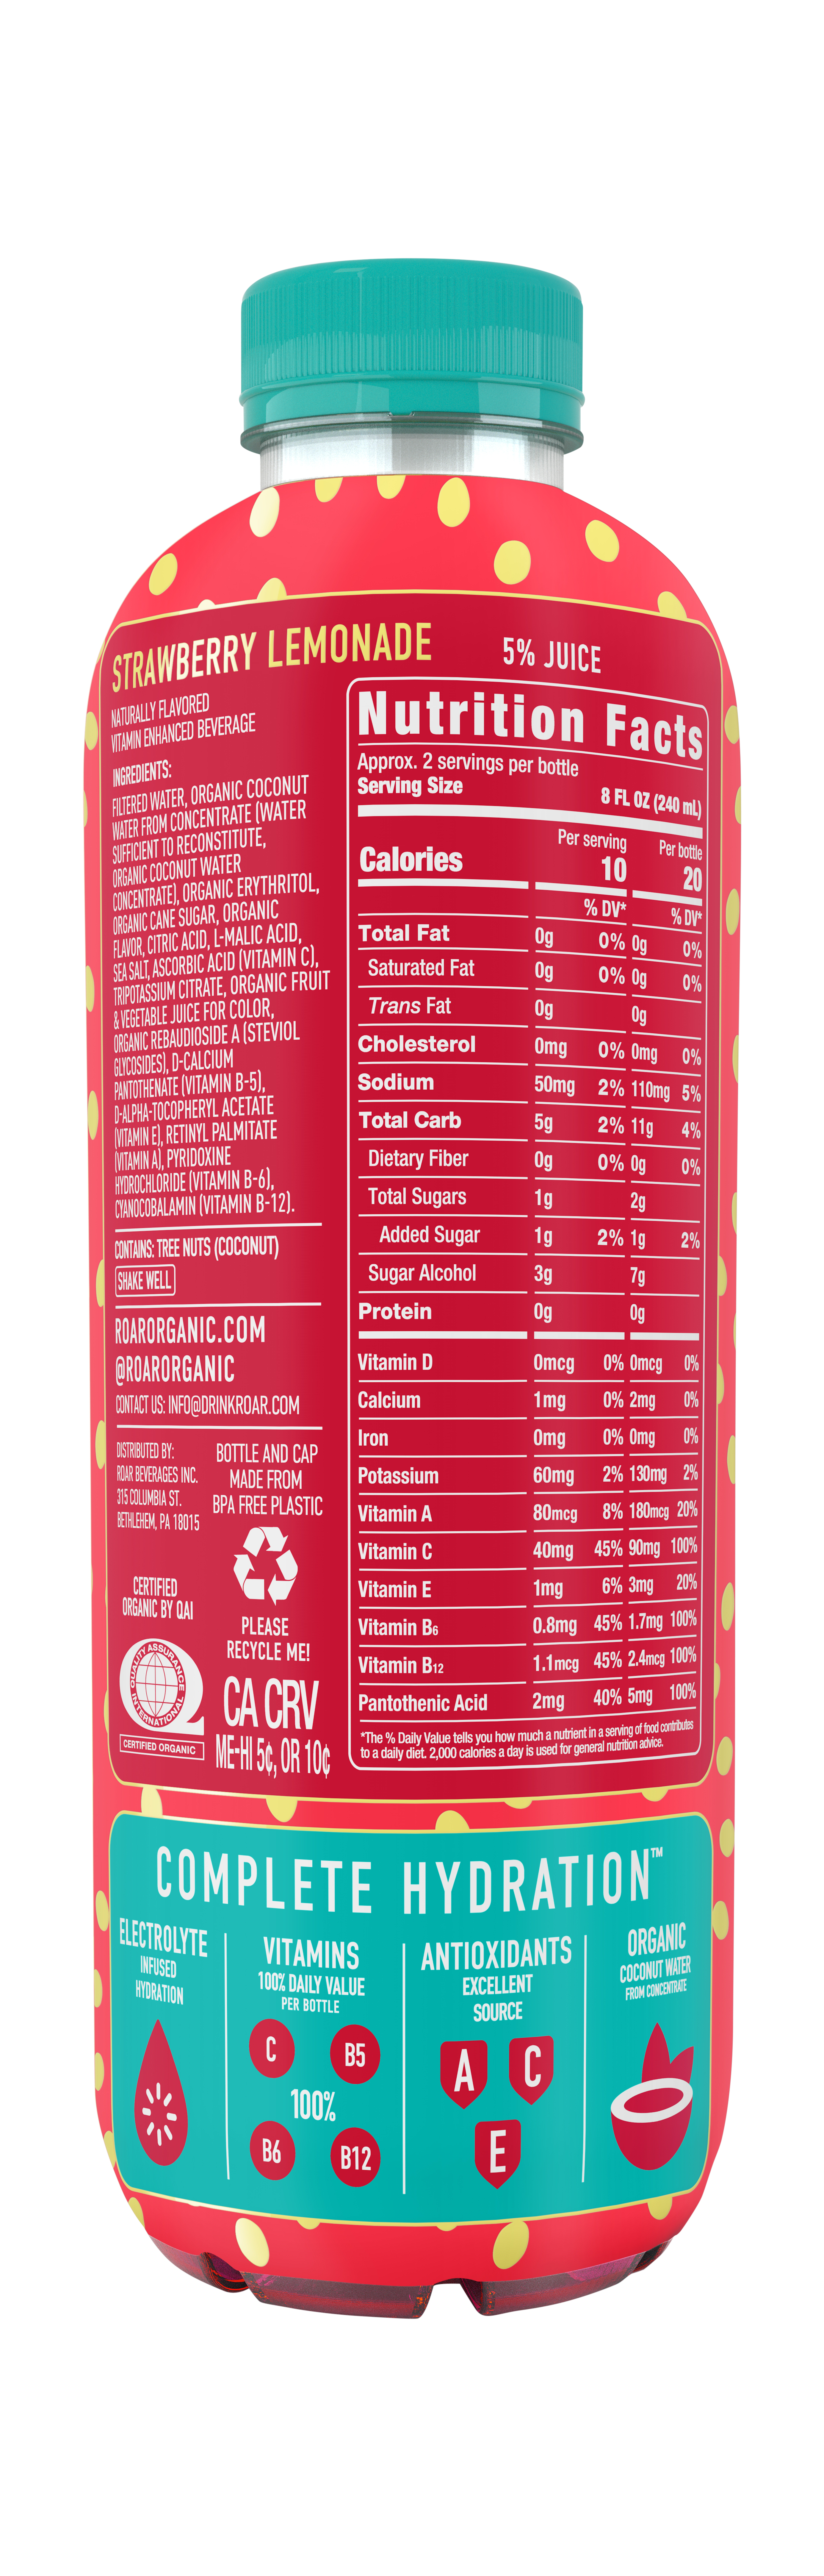 Roar Organic Strawberry Lemonade 1 units per case 18.0 oz